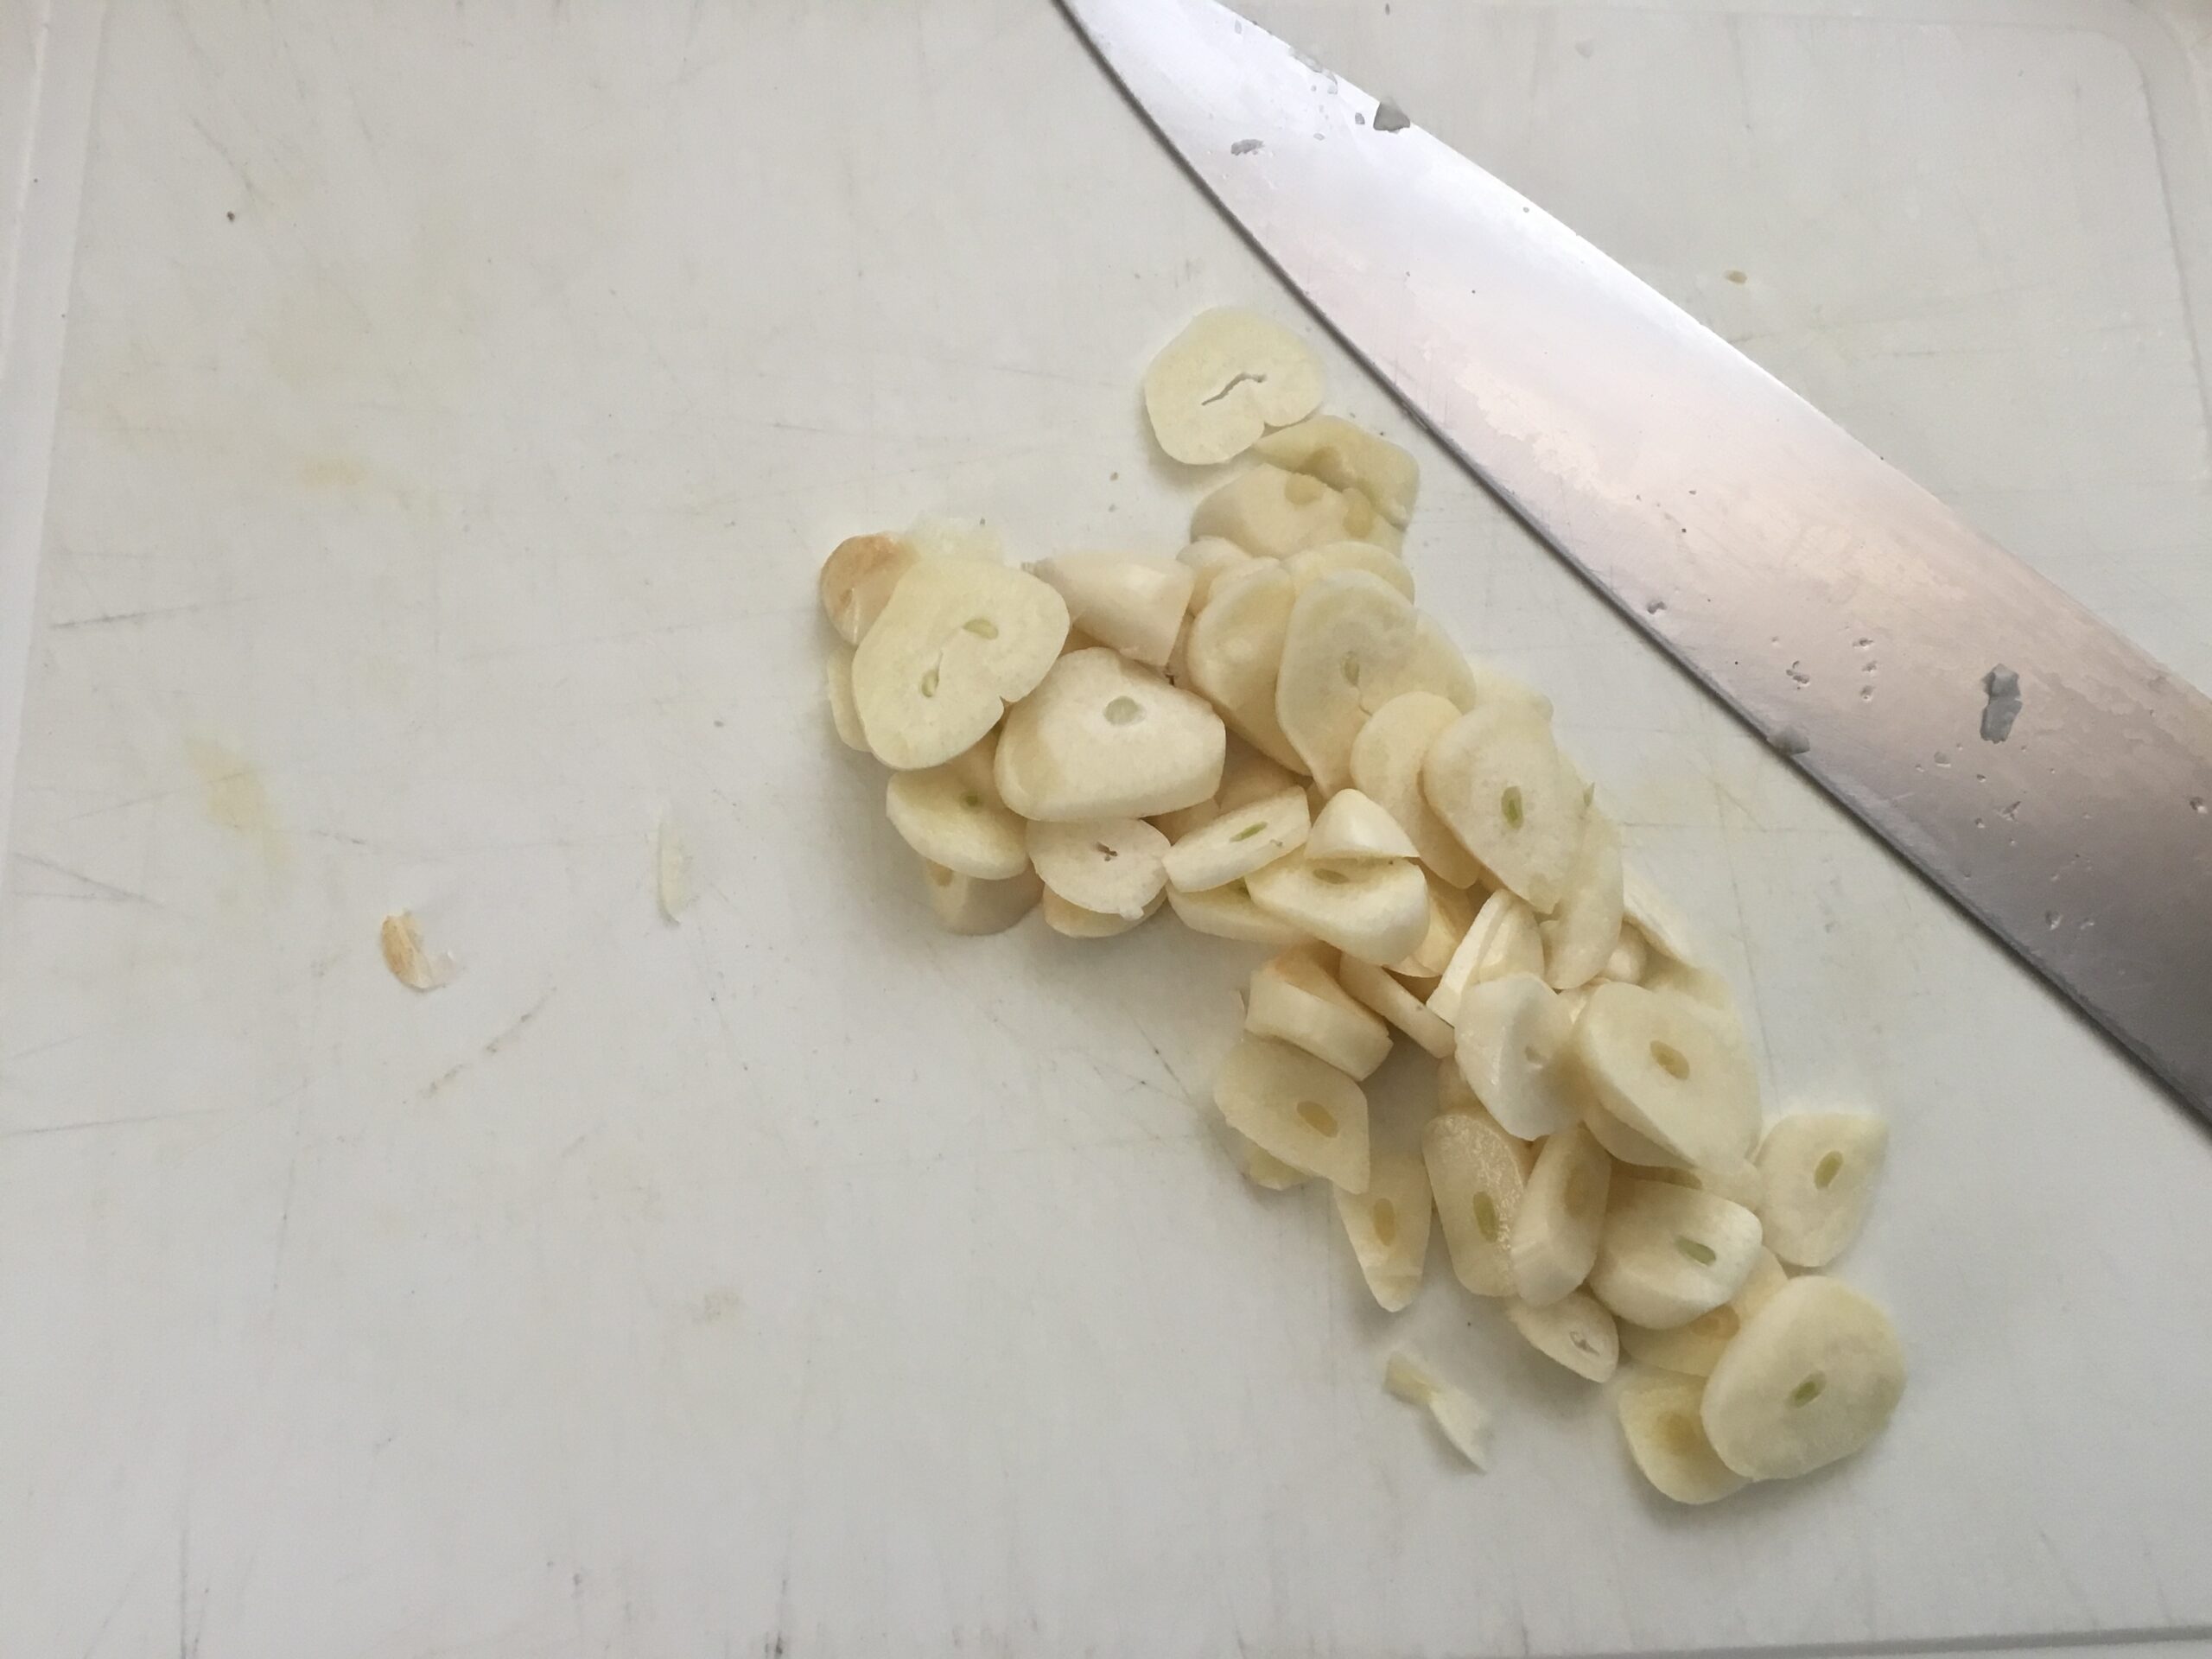 Chopping the garlic